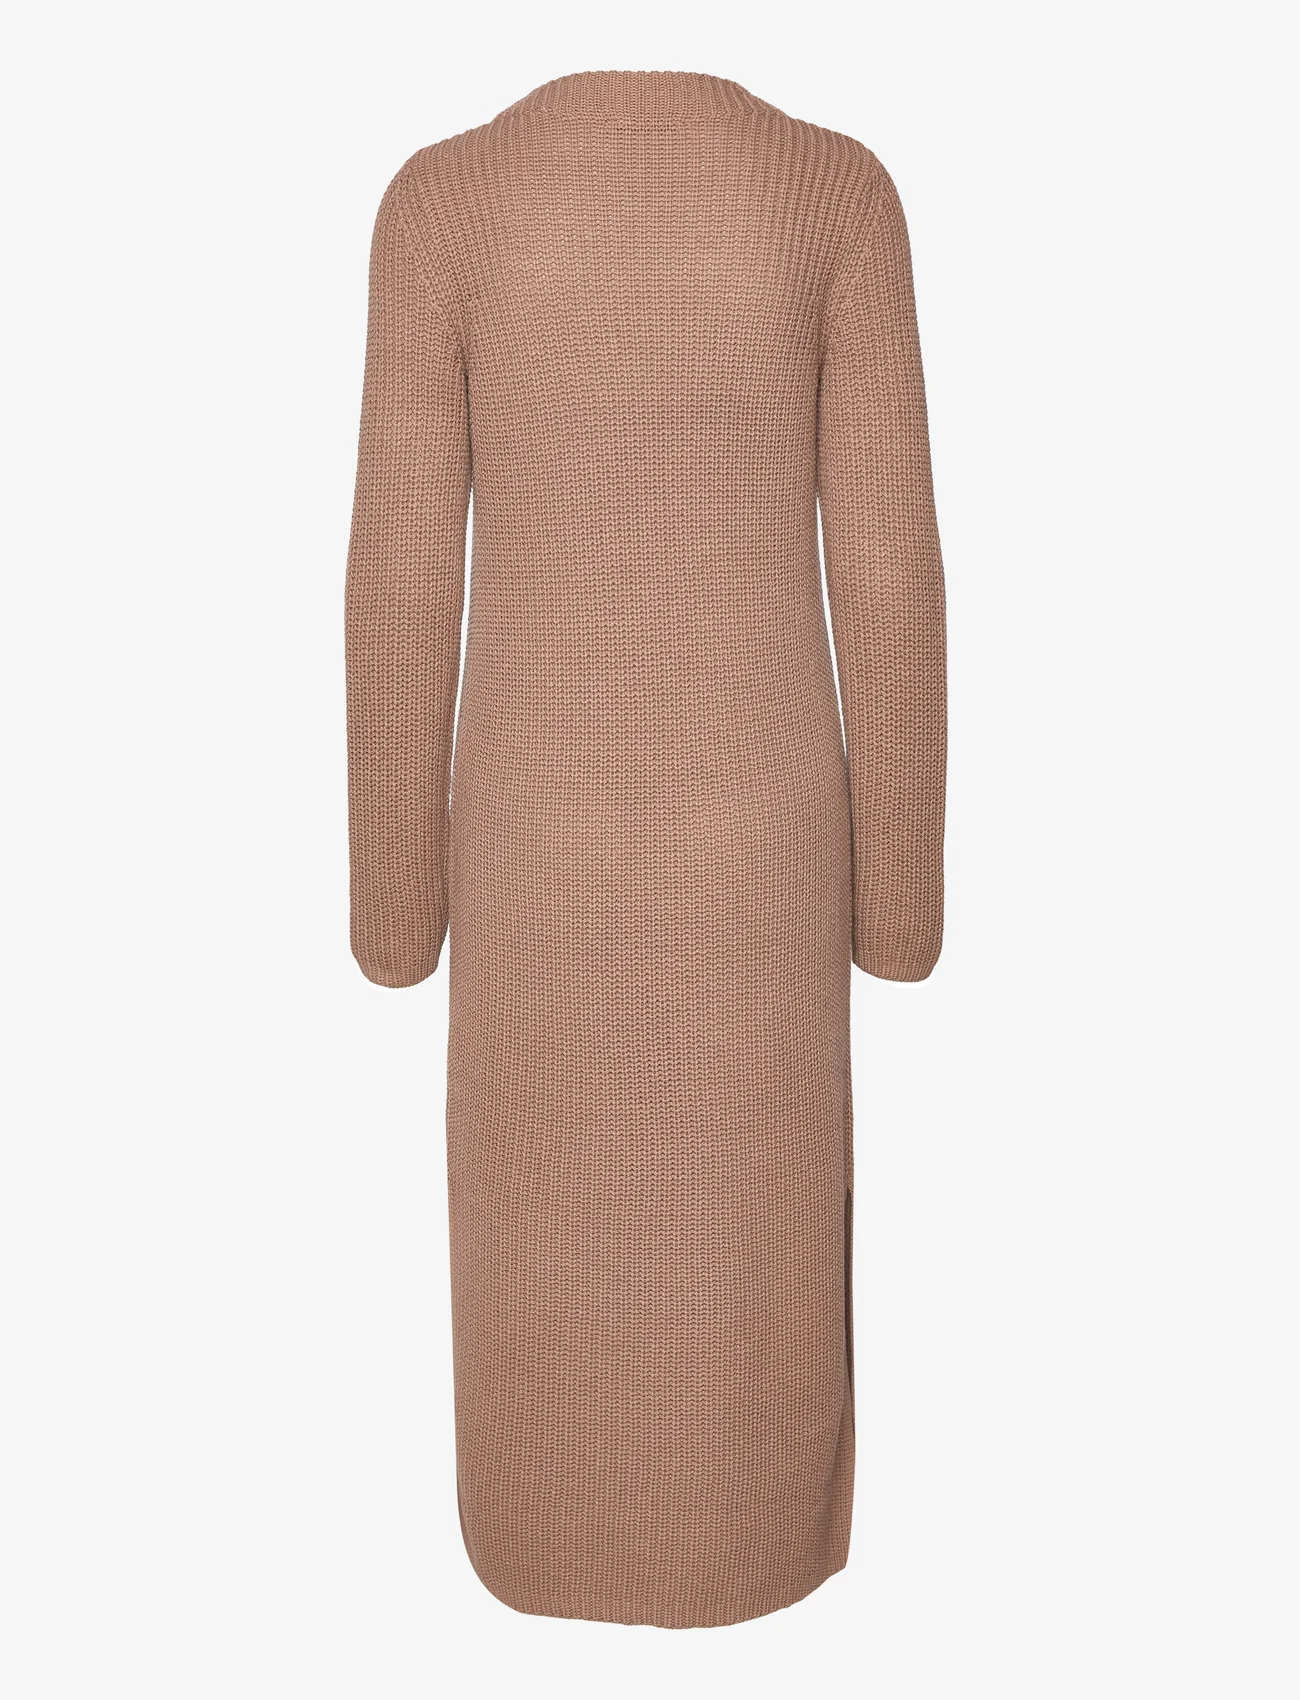 Esprit Casual - Knitted dress - adītas kleitas - taupe 5 - 1